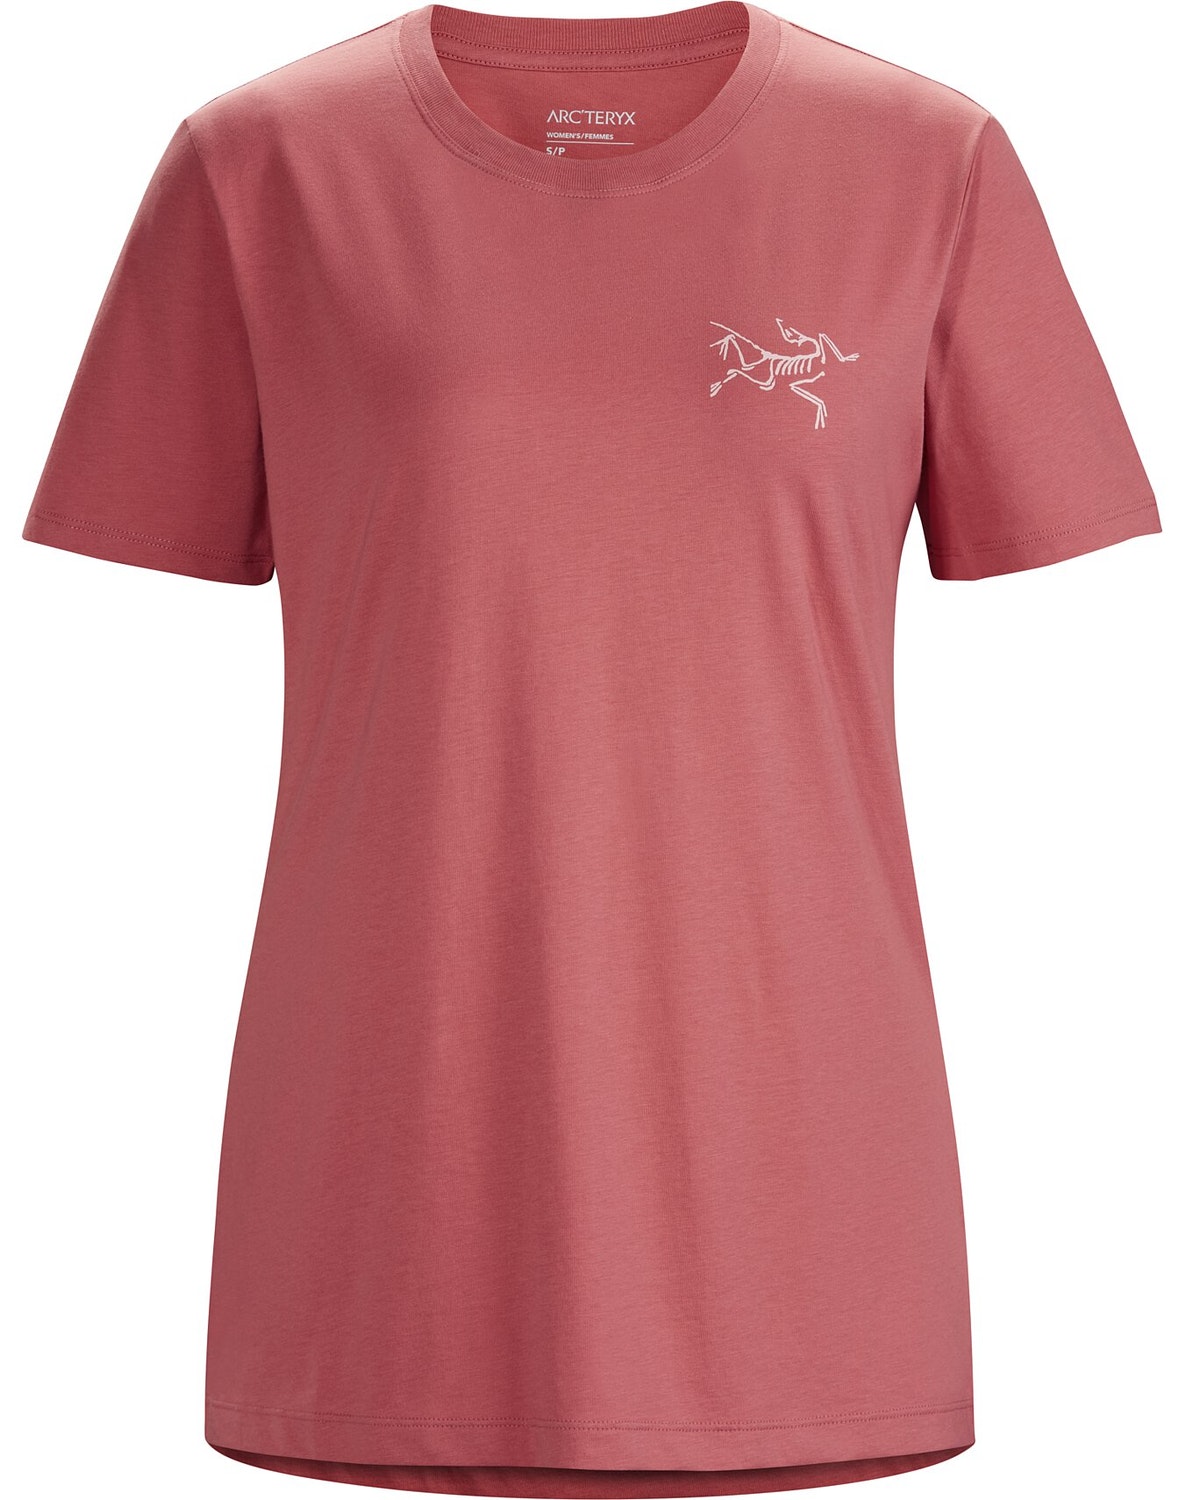 T-shirt Arc'teryx Bird Emblem Donna Rosa Chiaro - IT-4163551